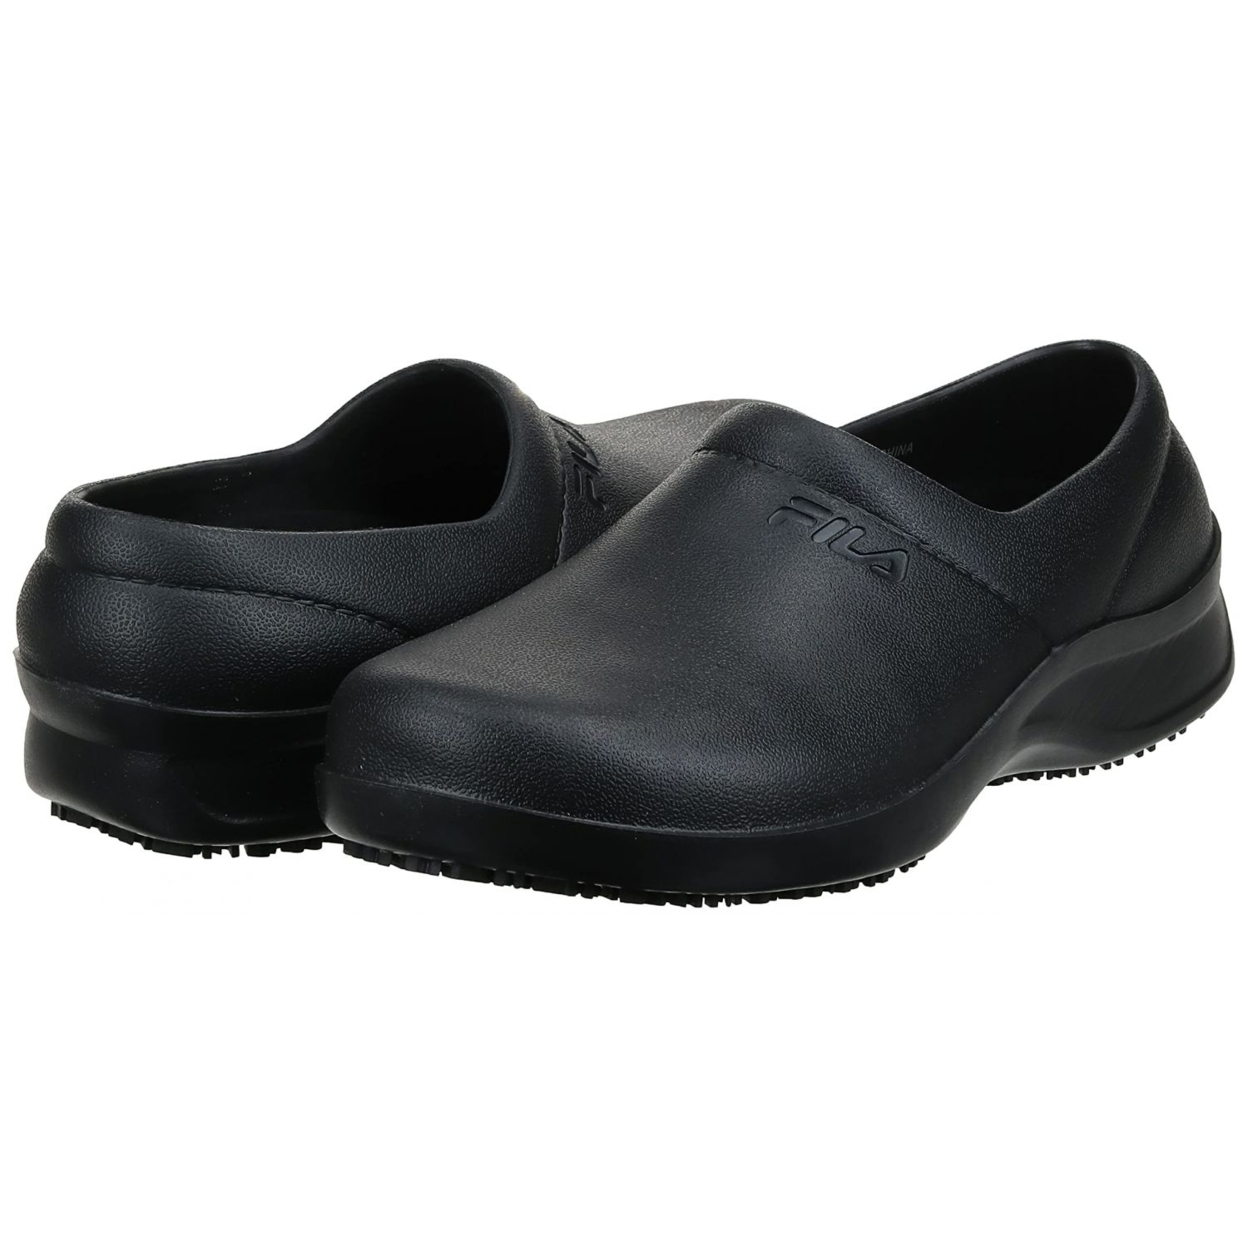 Fila Women's Galvanize Slip Resistant Work Shoe Hiking BLK/BLK/BLK - Black, 9